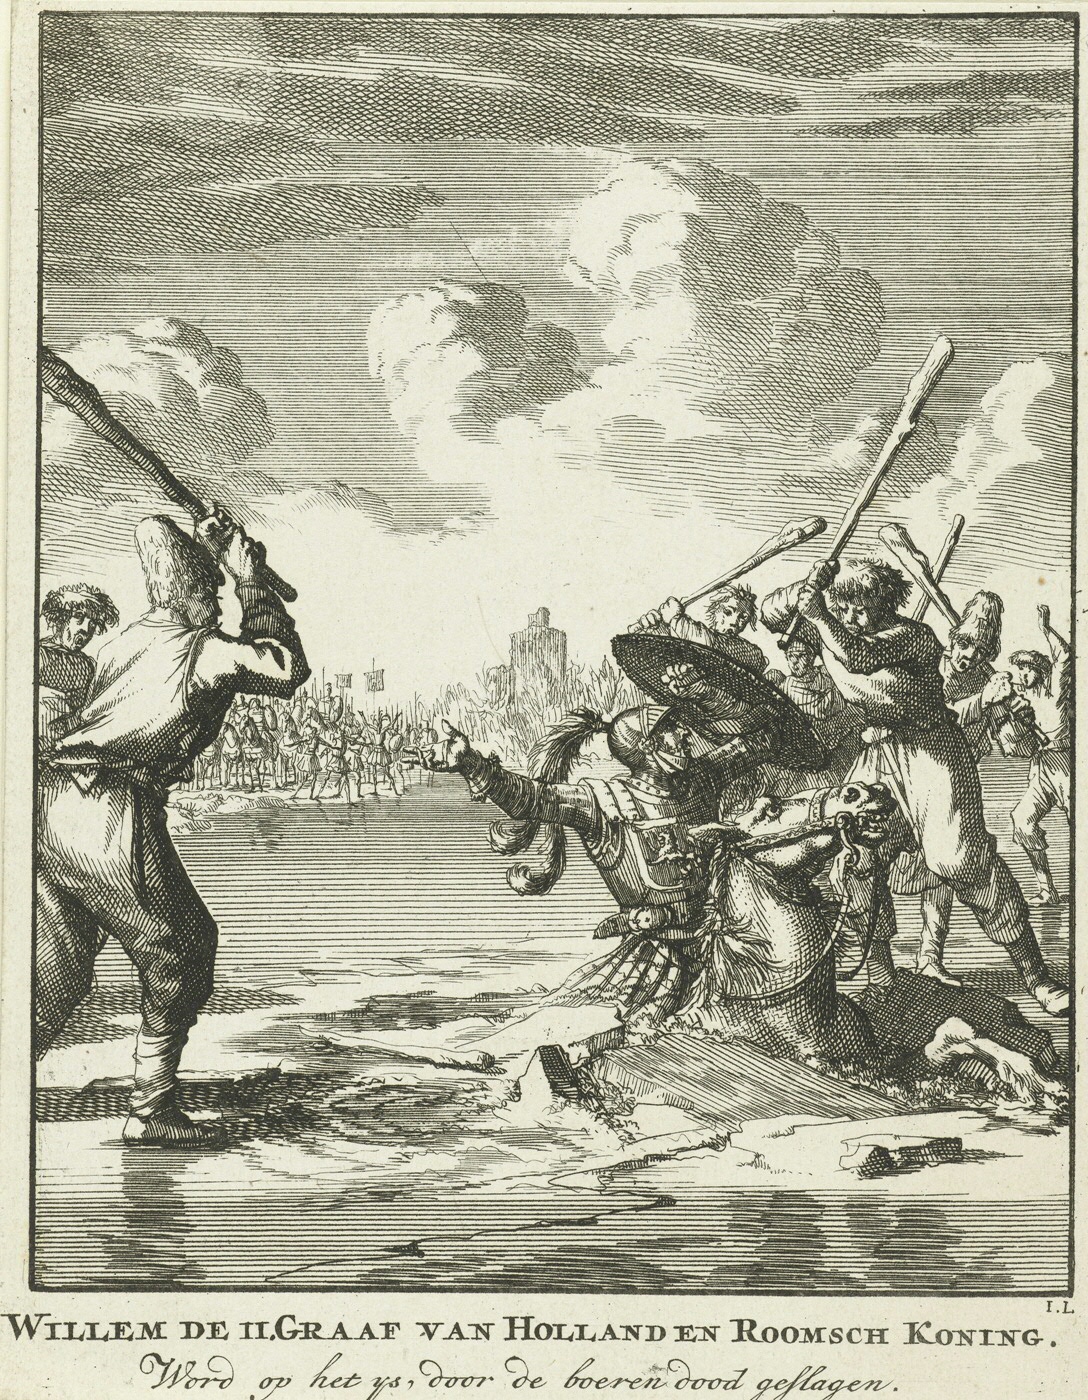 6. Count William II falling through the ice near Hoogwoud, 1256, Jan Luyken, 1660–1712, etching